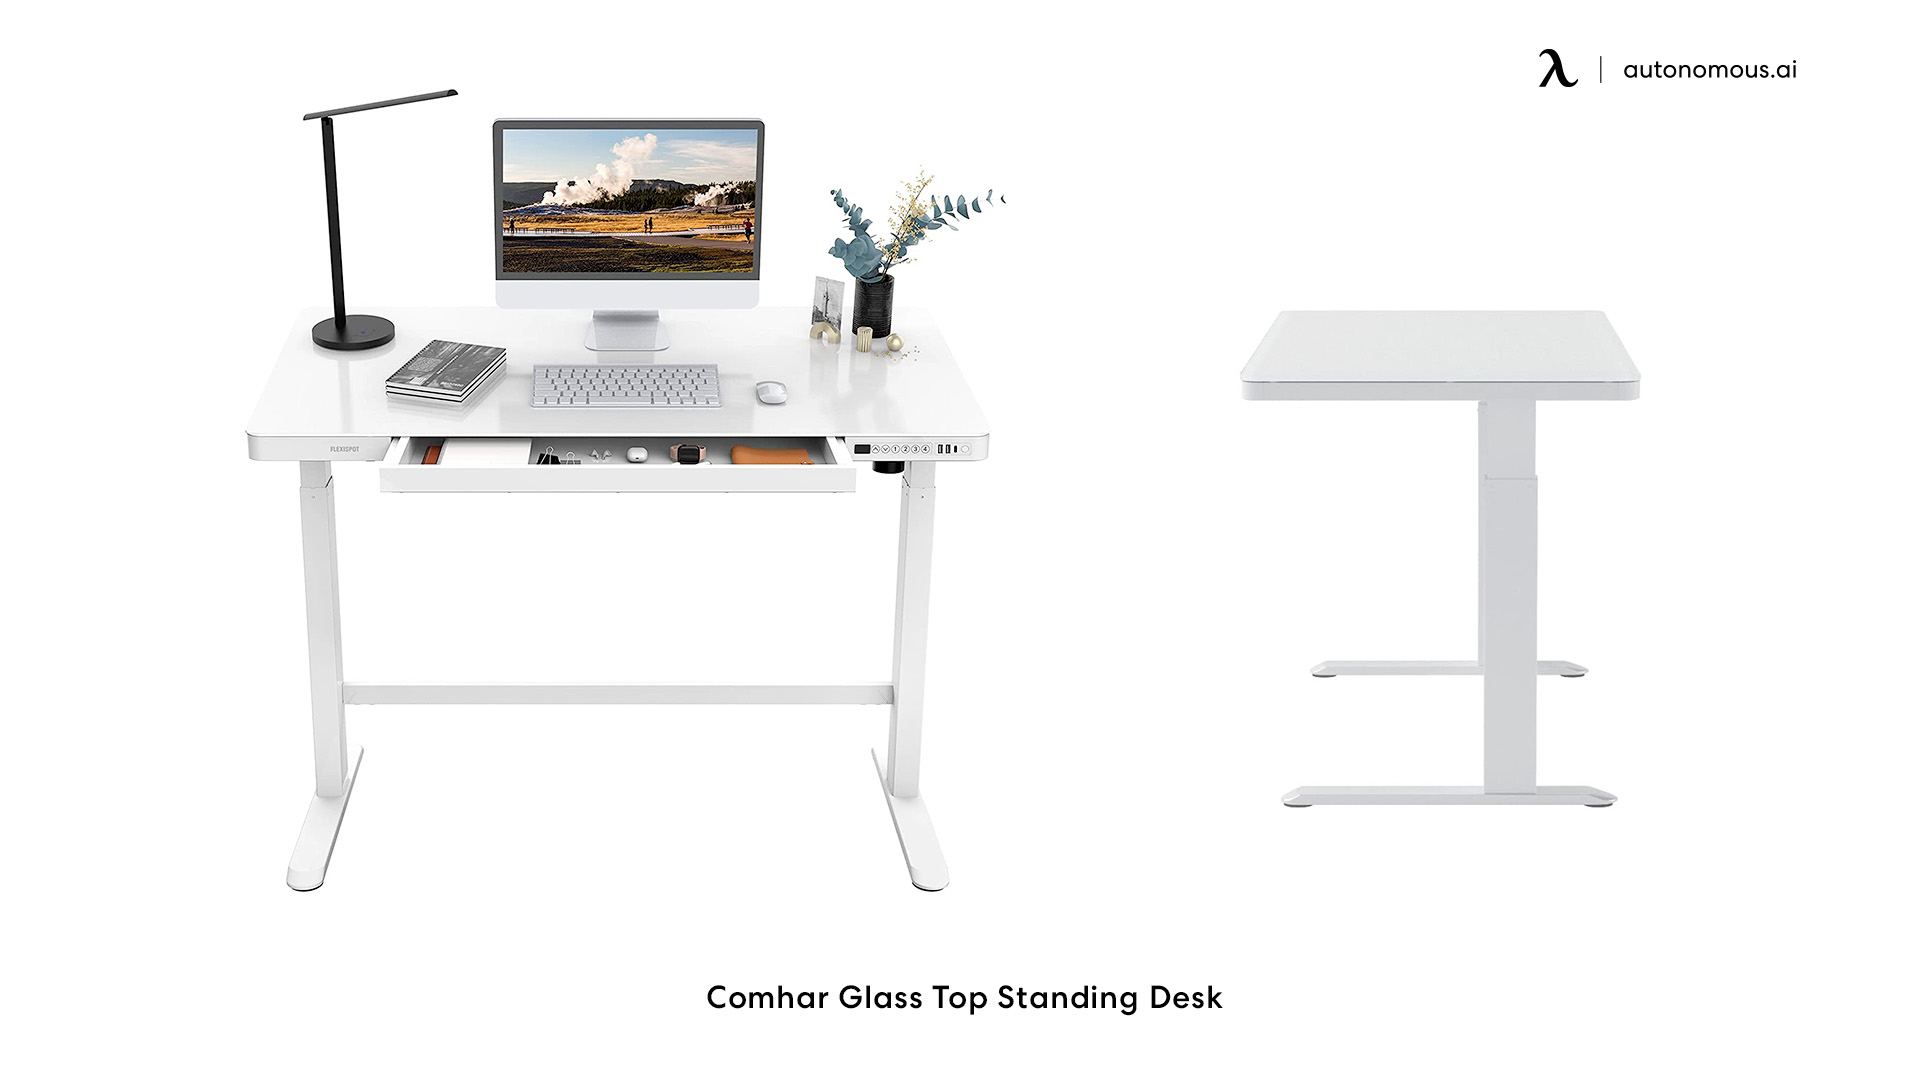 Comhar Glass Top Standing Desk